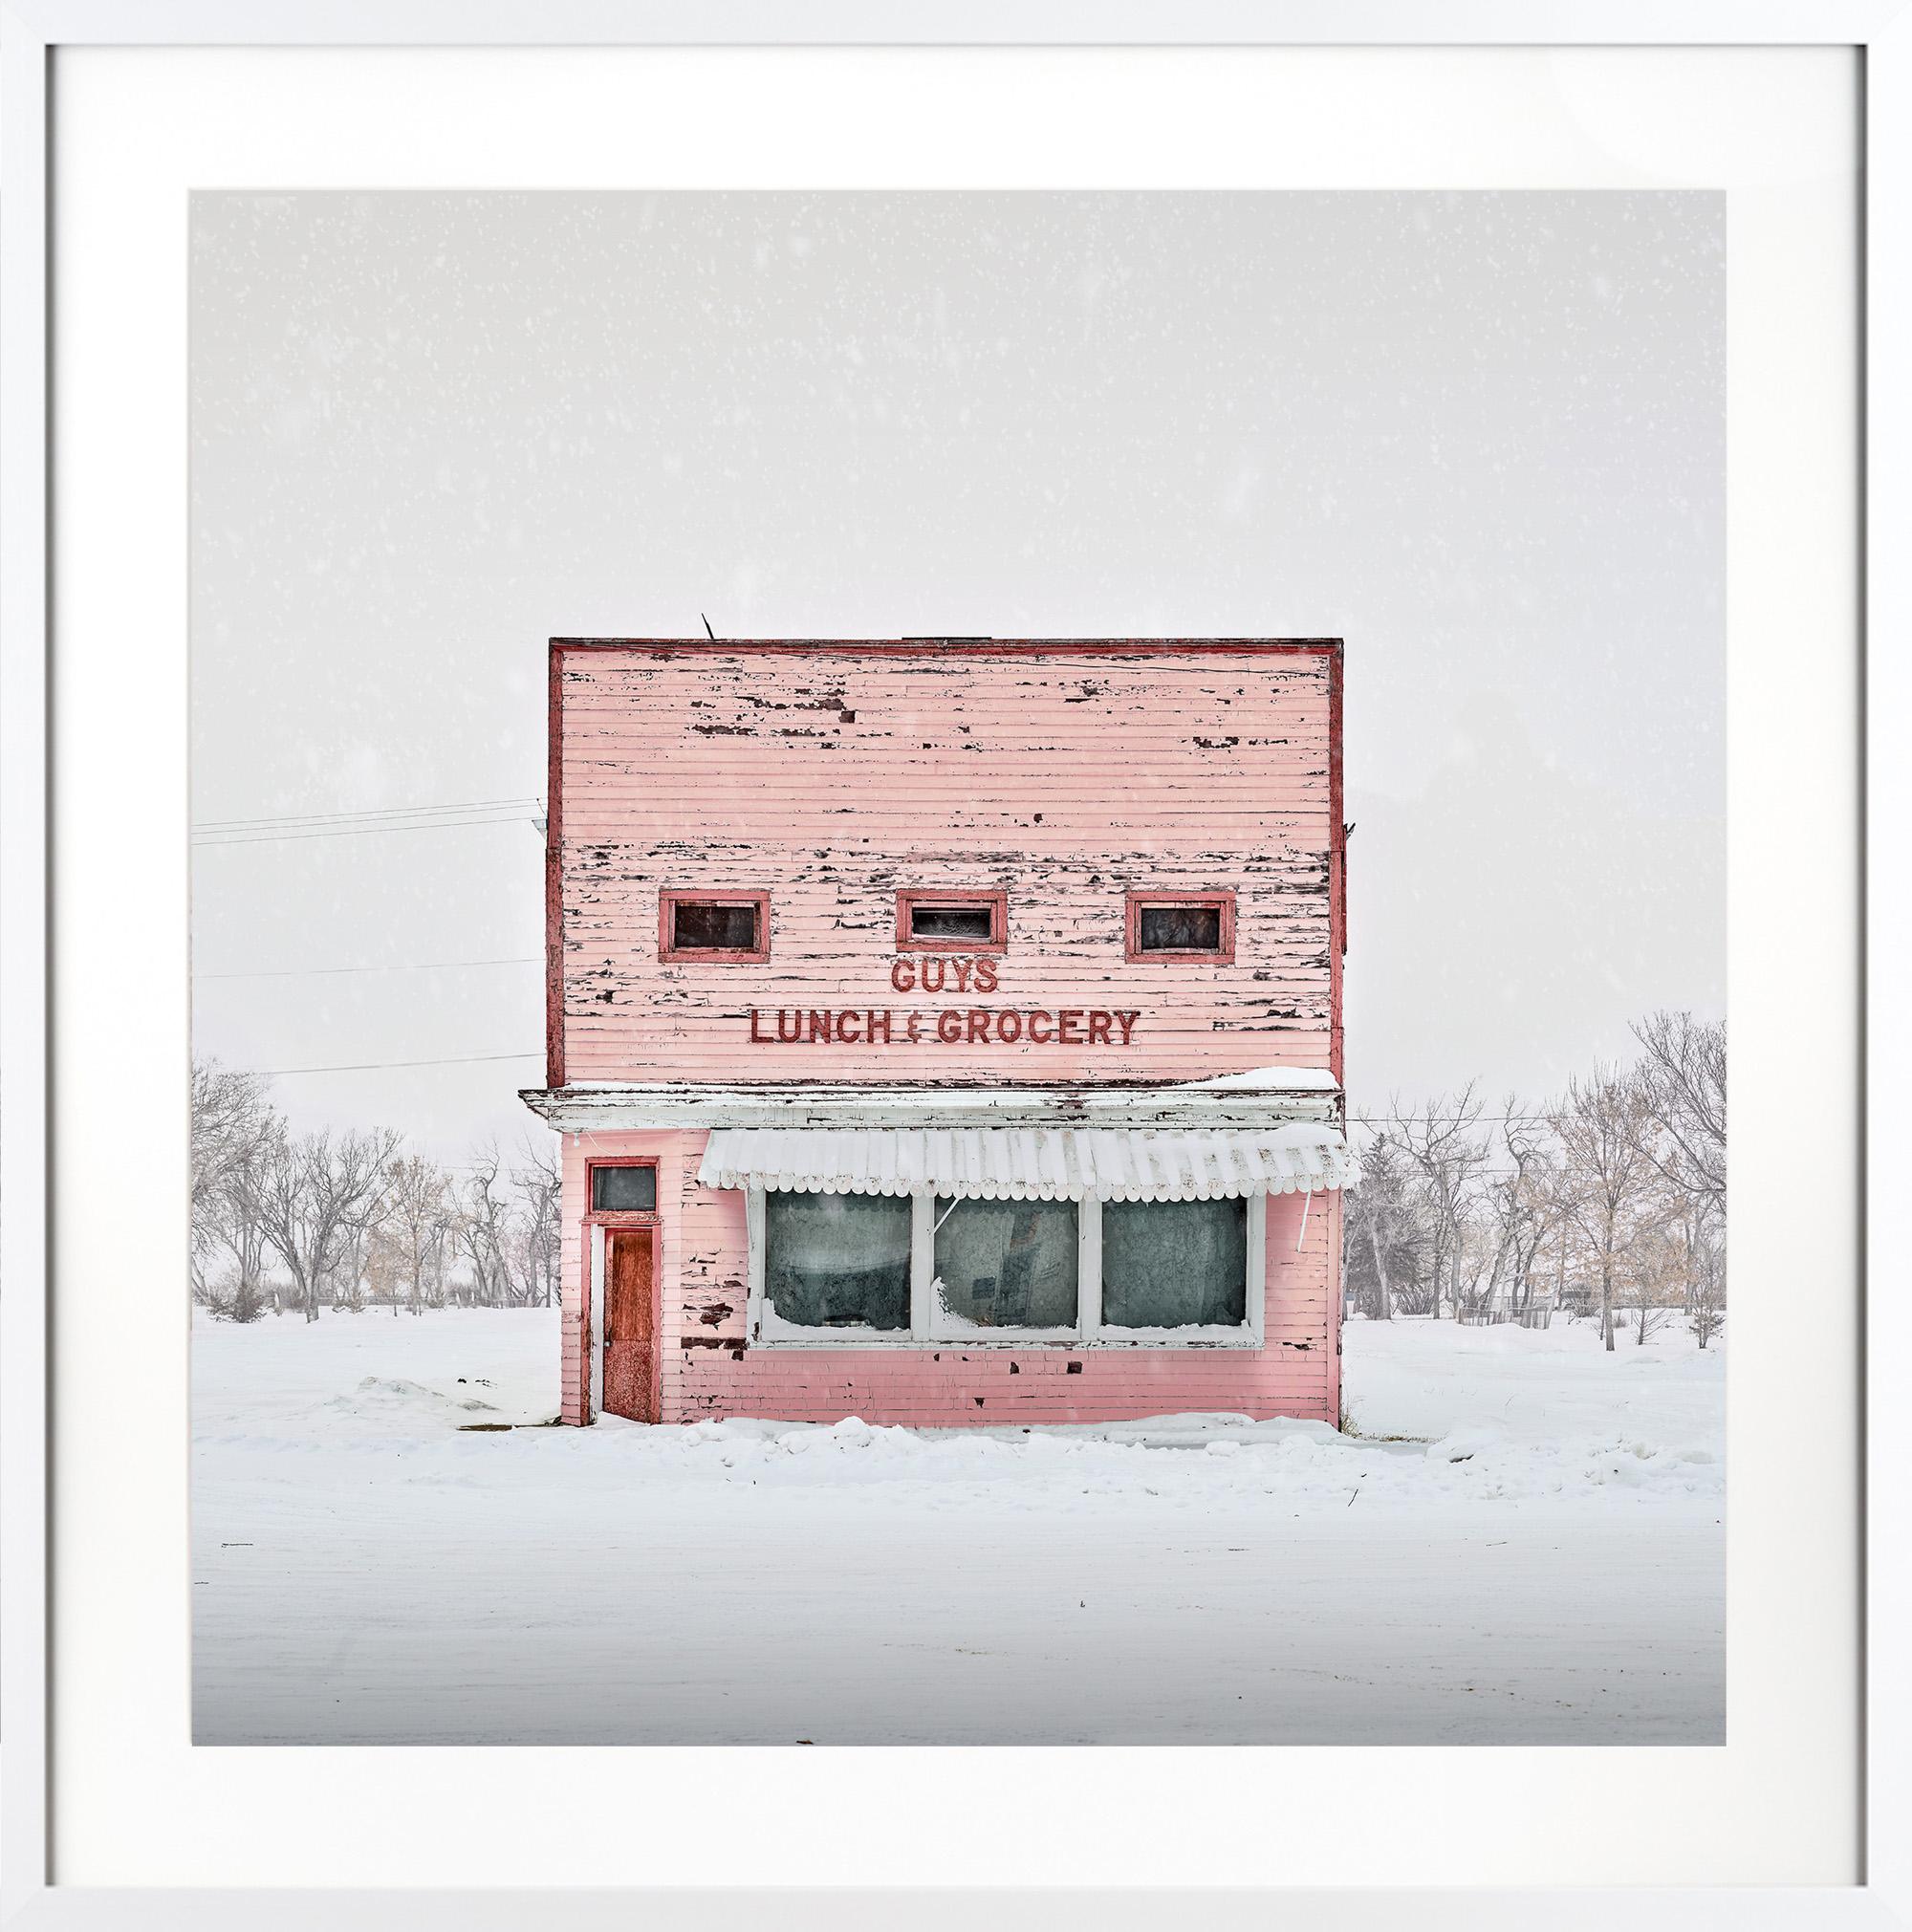 David Burdeny Color Photograph - "Guy's Lunch & Grocery, Saskatchewan, Canada" Dynamic Photo with Snowy Backdrop